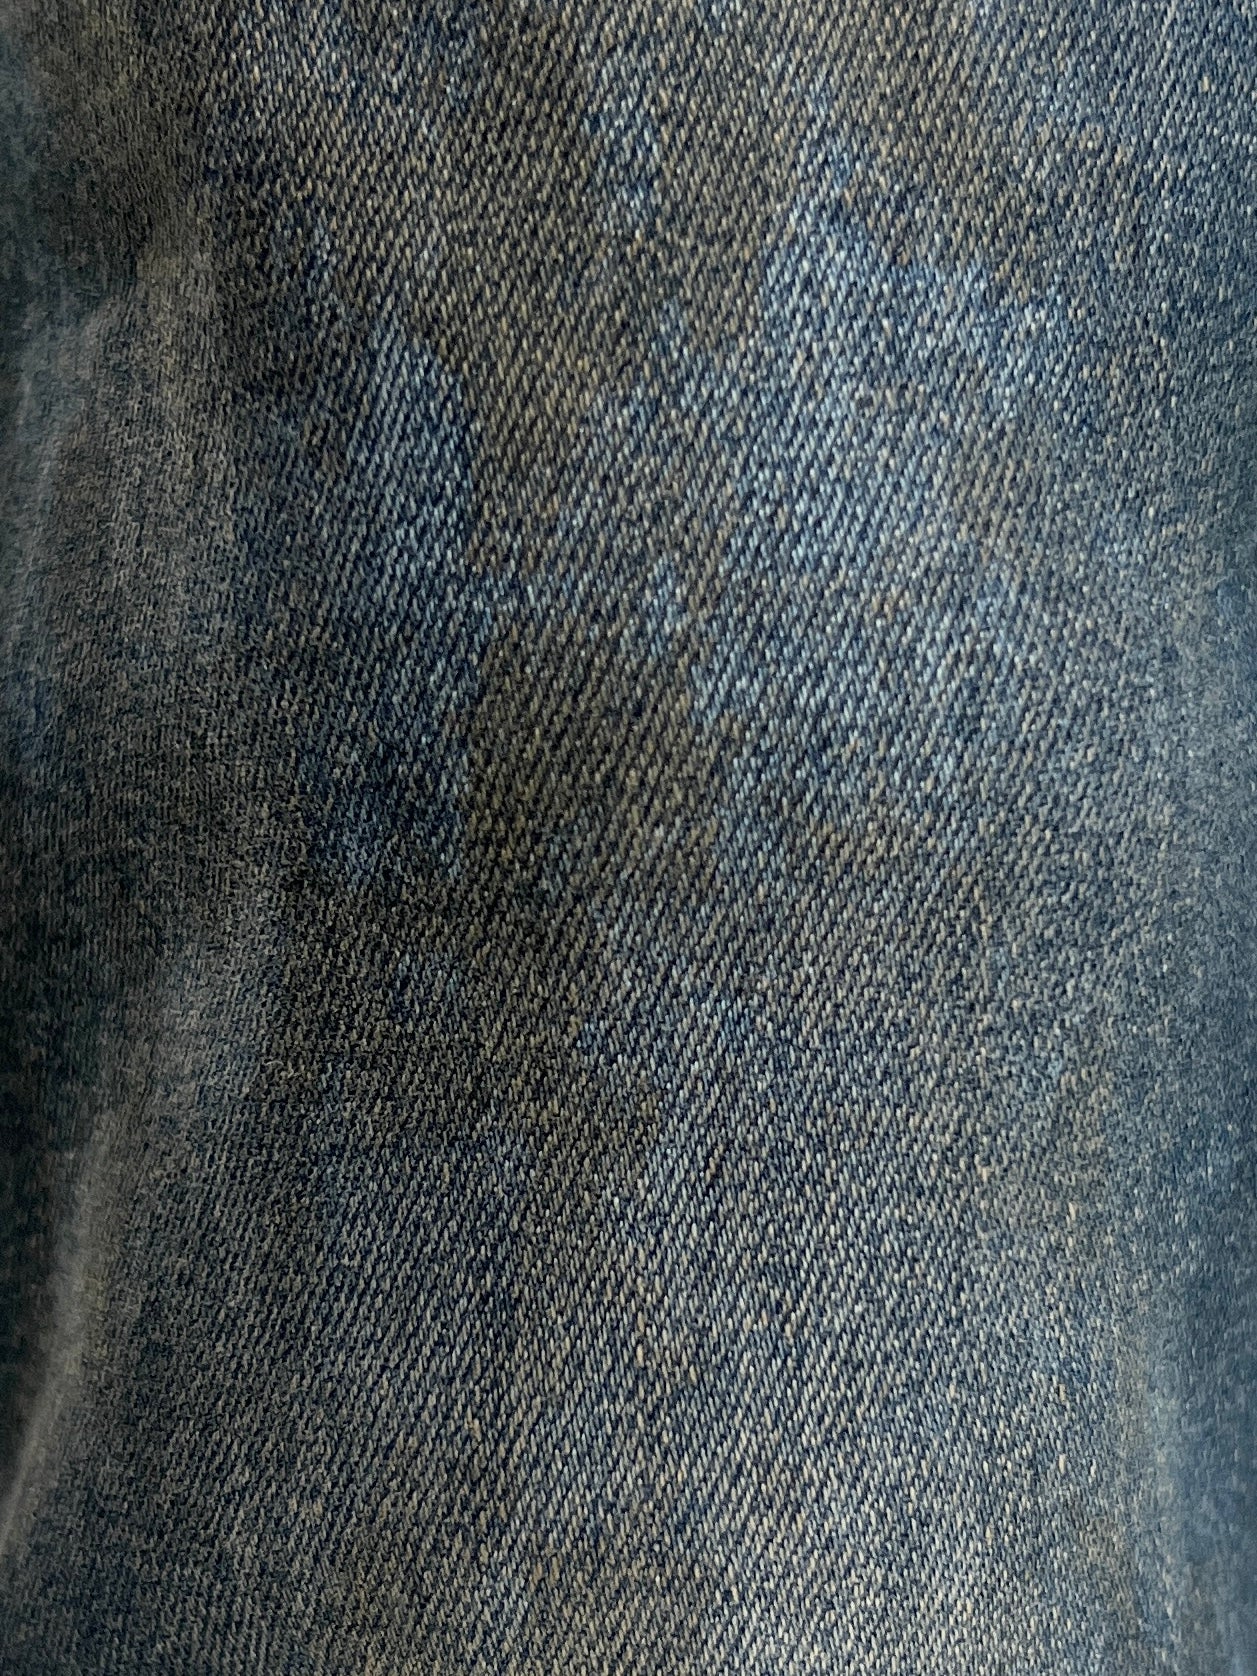 A close-up of a pair of REPRESENT M07043 ESSENTIAL DENIM STUDIO BLUE jeans.